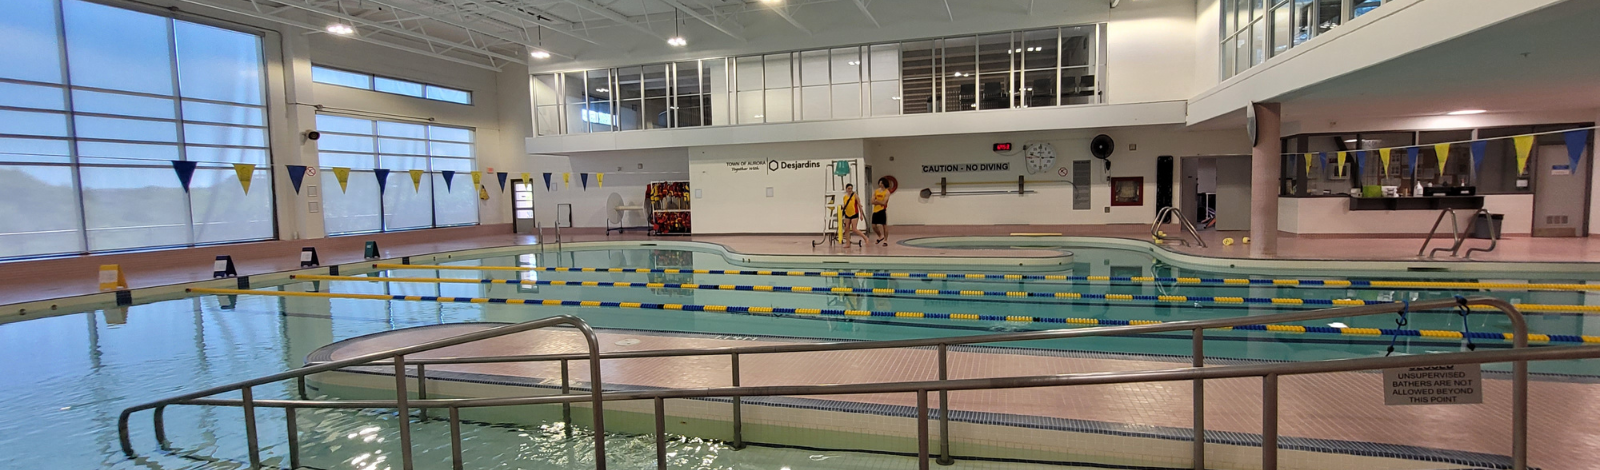 Aurora Family Leisure Complex pool